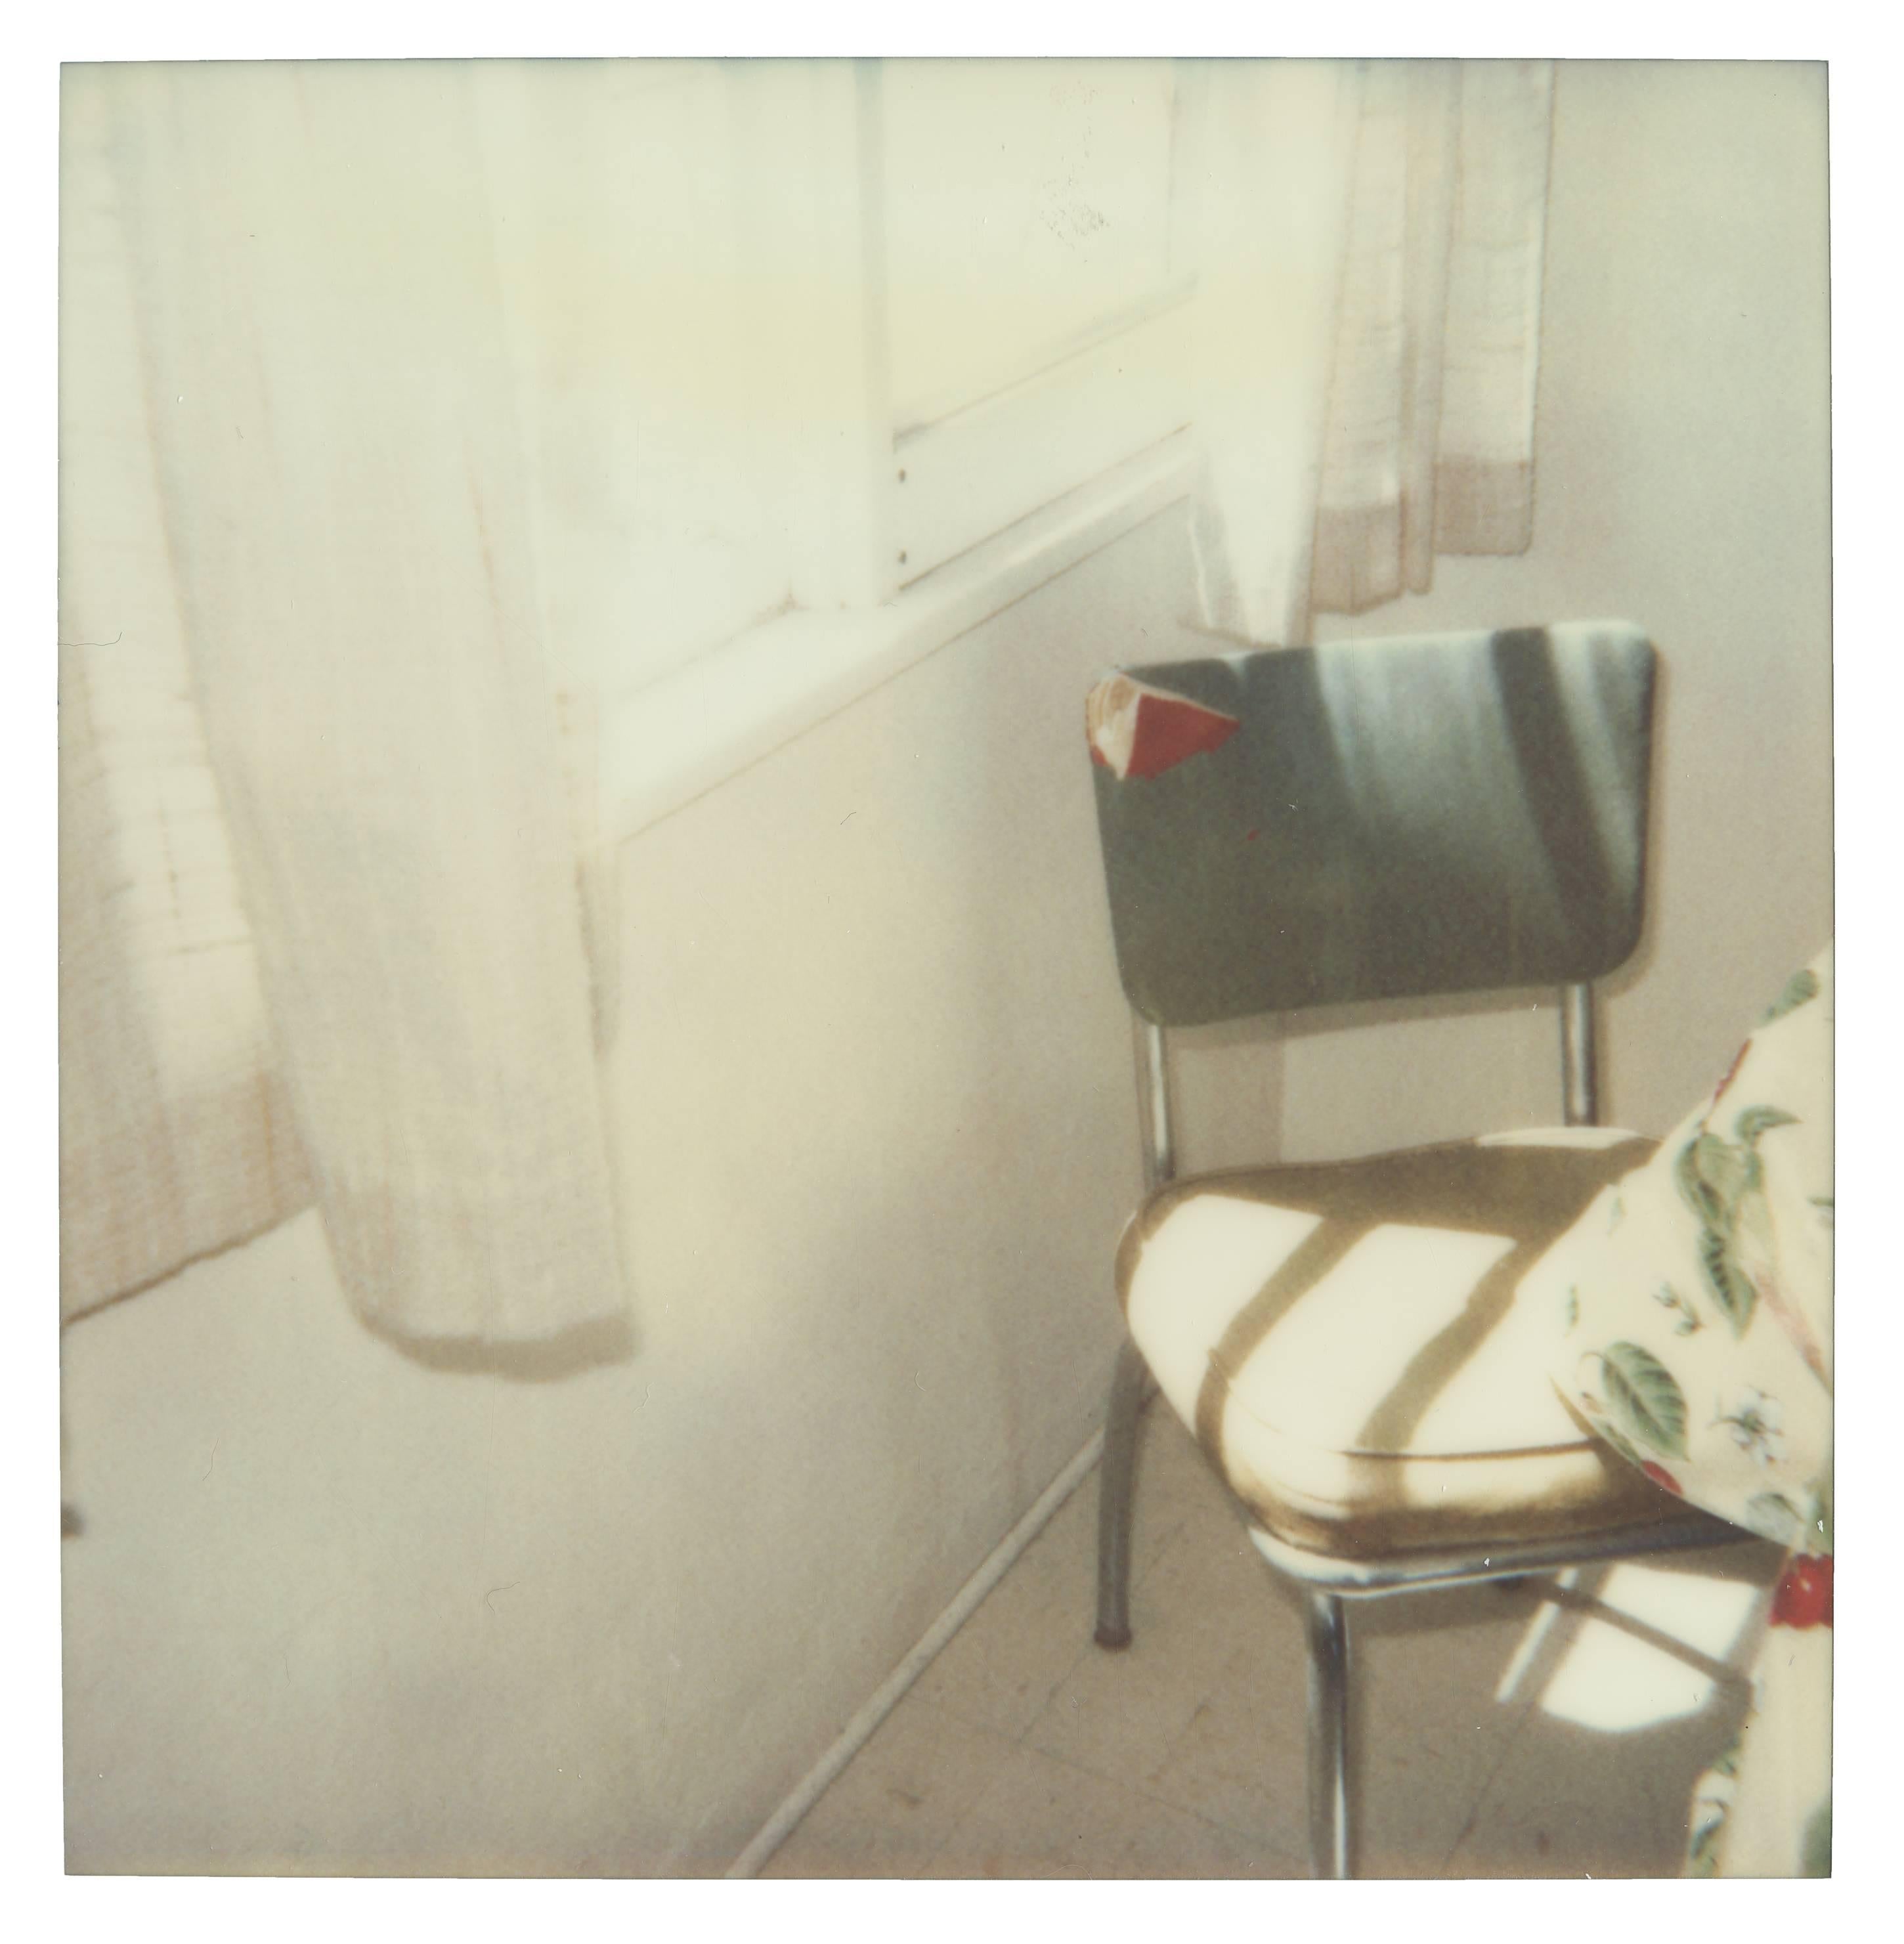 Stefanie Schneider Color Photograph - Green Chair - 29 Palms, CA, 21st Century, Polaroid, Stil-life Photography 